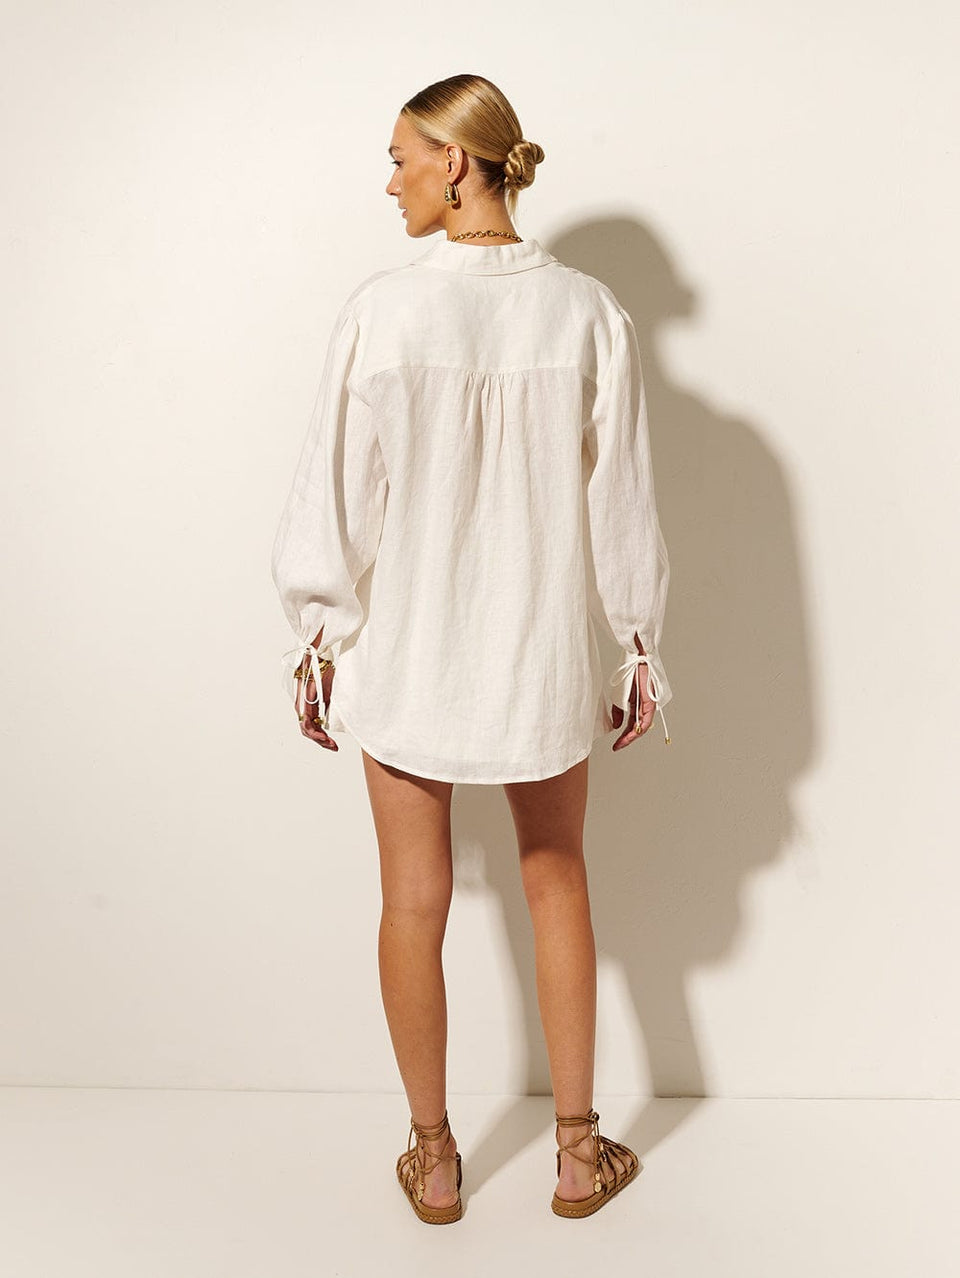 Franca Shirt KIVARI | Model wears white linen shirt back view